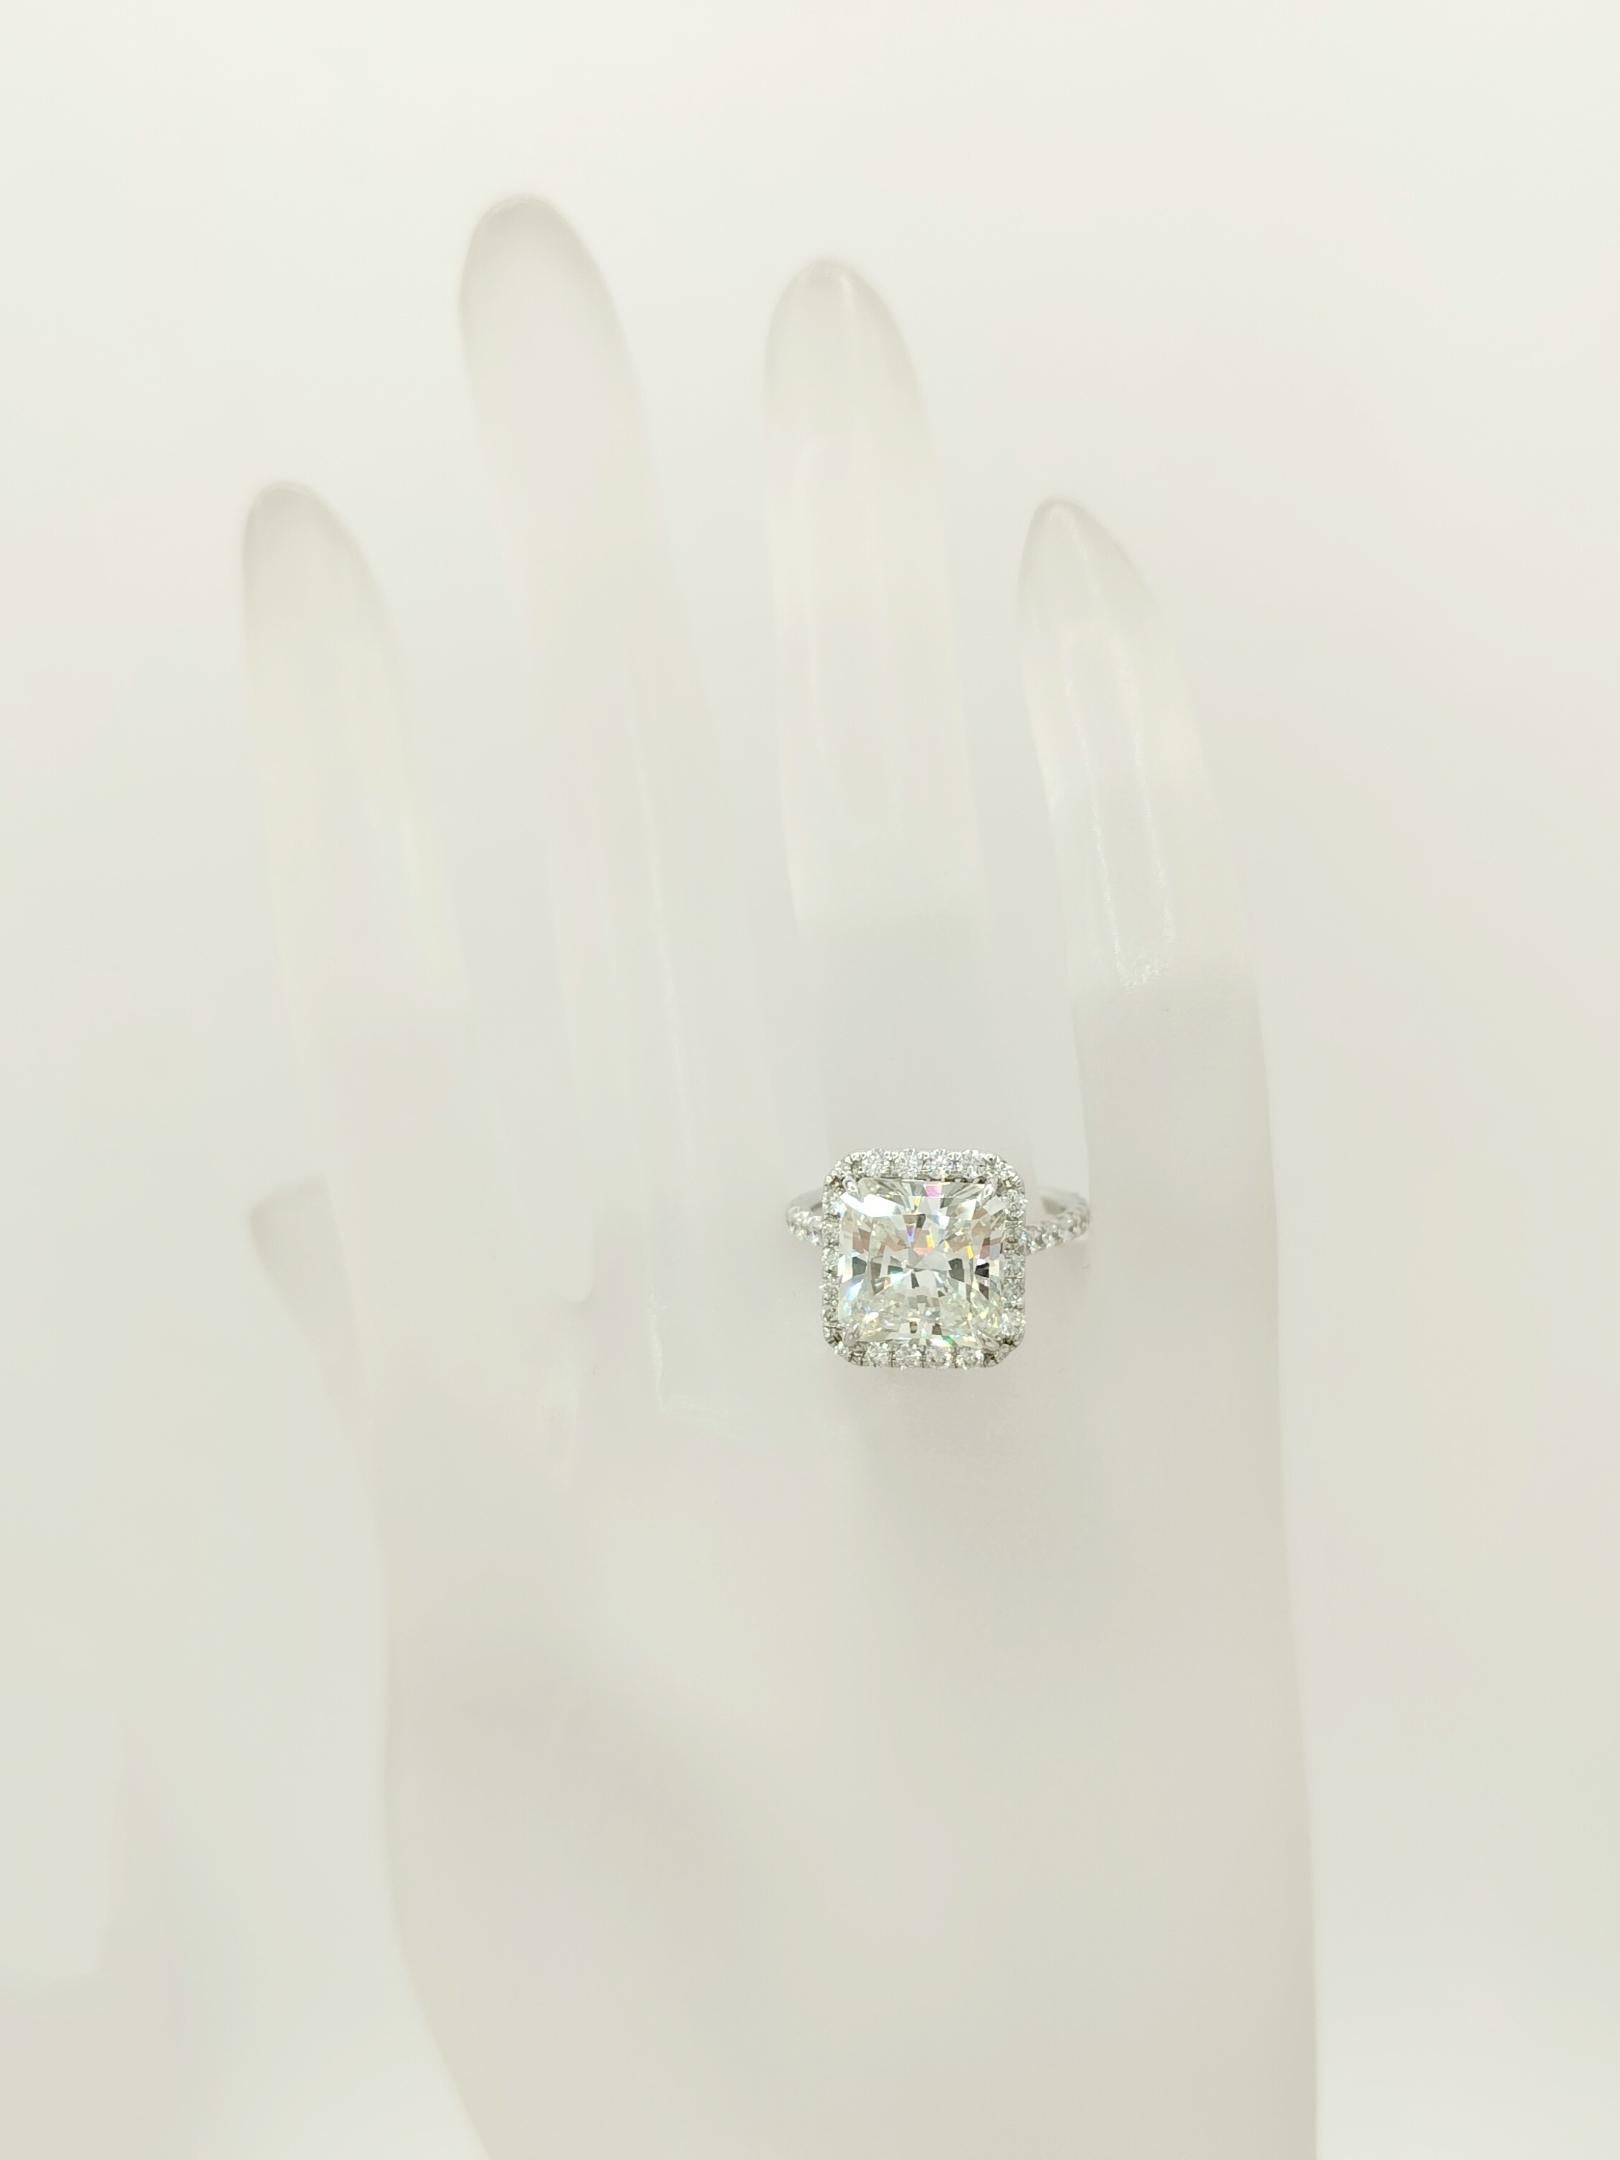 Radiant Cut GIA 5.27 ct. White Diamond Radiant Ring on 18K White Gold For Sale